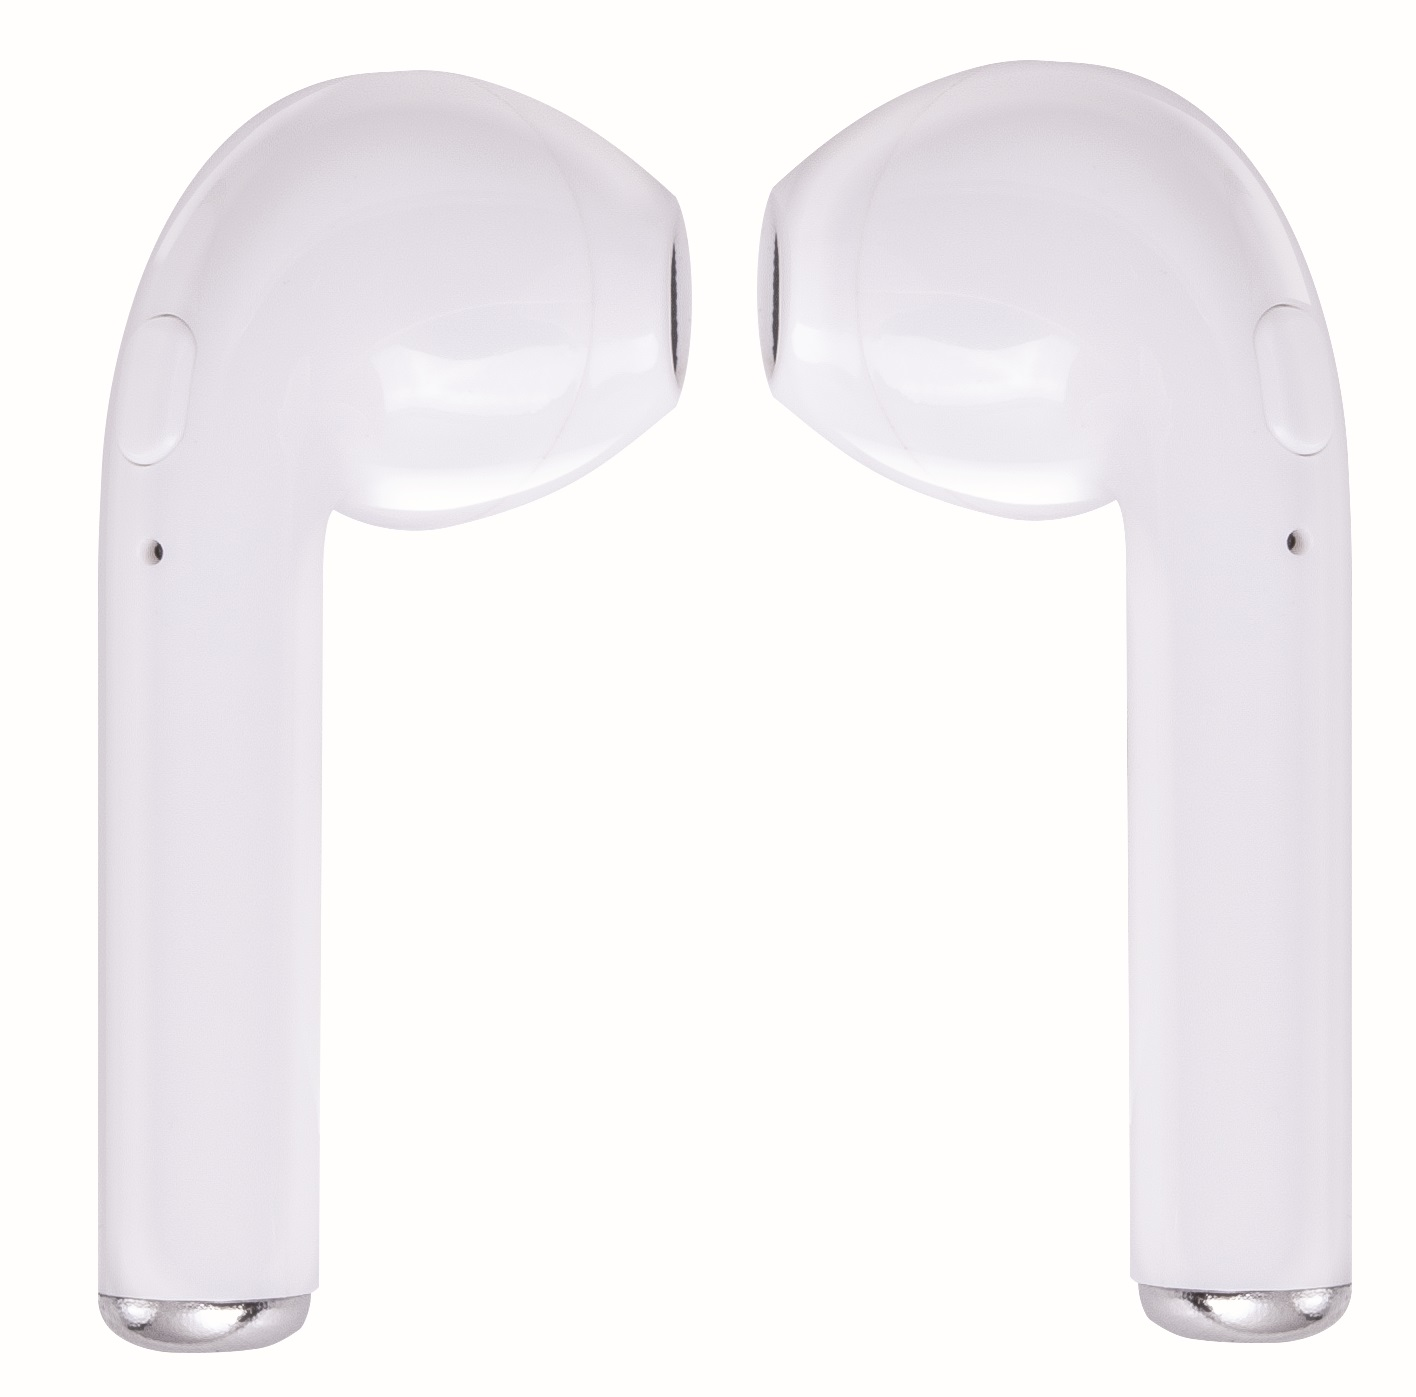 TREVI HMP 1220 Air weiß Wireless Bluetooth In-ear Headphones weiss